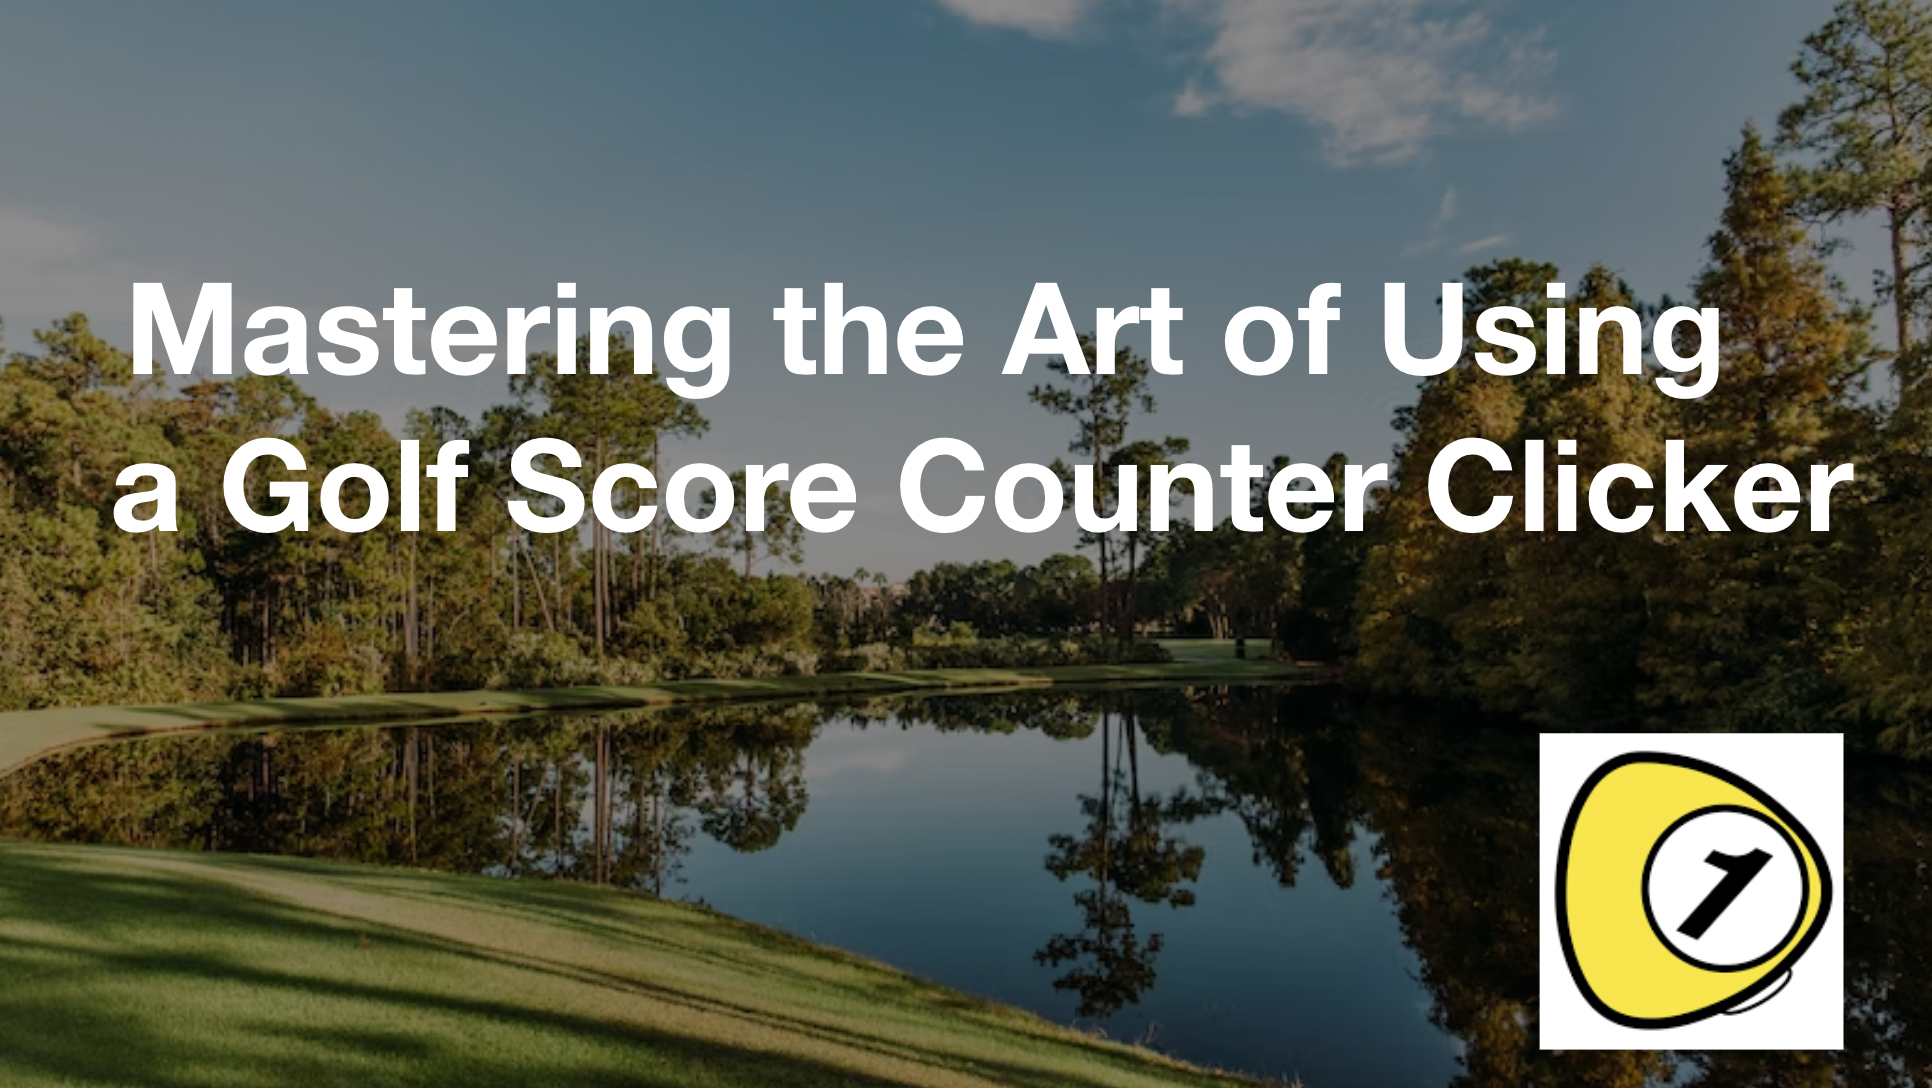 golfscorecounter_Mastering the Art of Using a Golf Score Counter Clicker